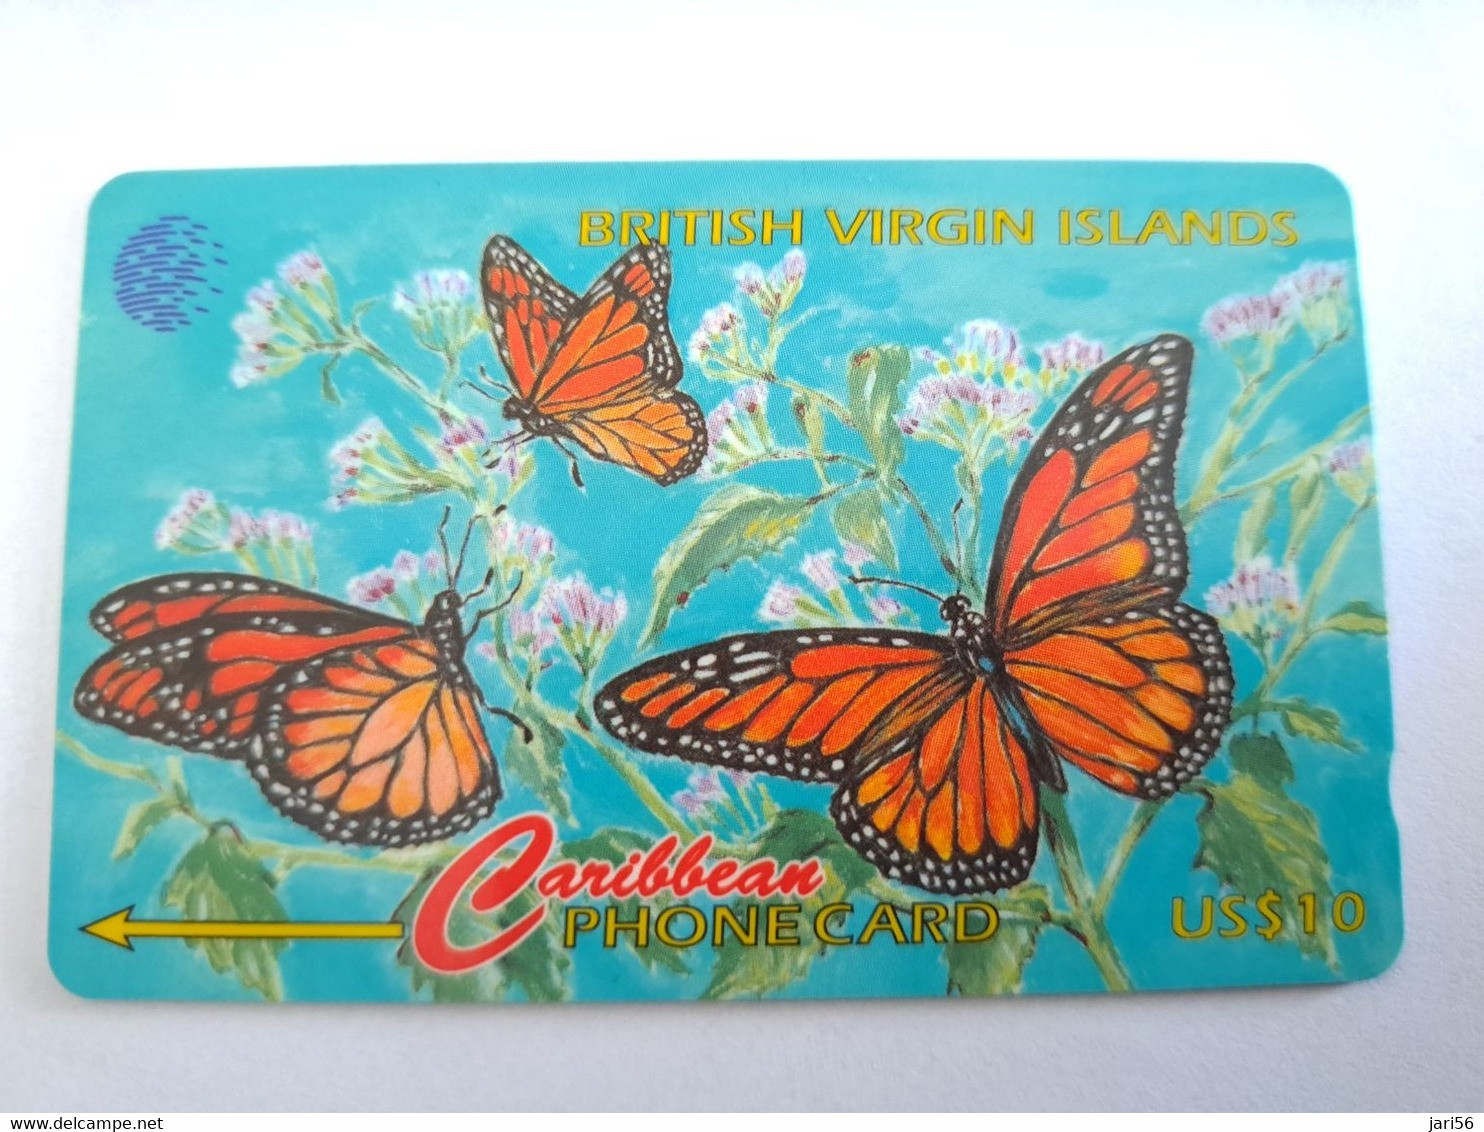 BRITSCH VIRGIN ISLANDS  US$ 10  BVI-91B   BUTTERFLY    91CBVB     Fine Used Card   ** 10723** - Virgin Islands